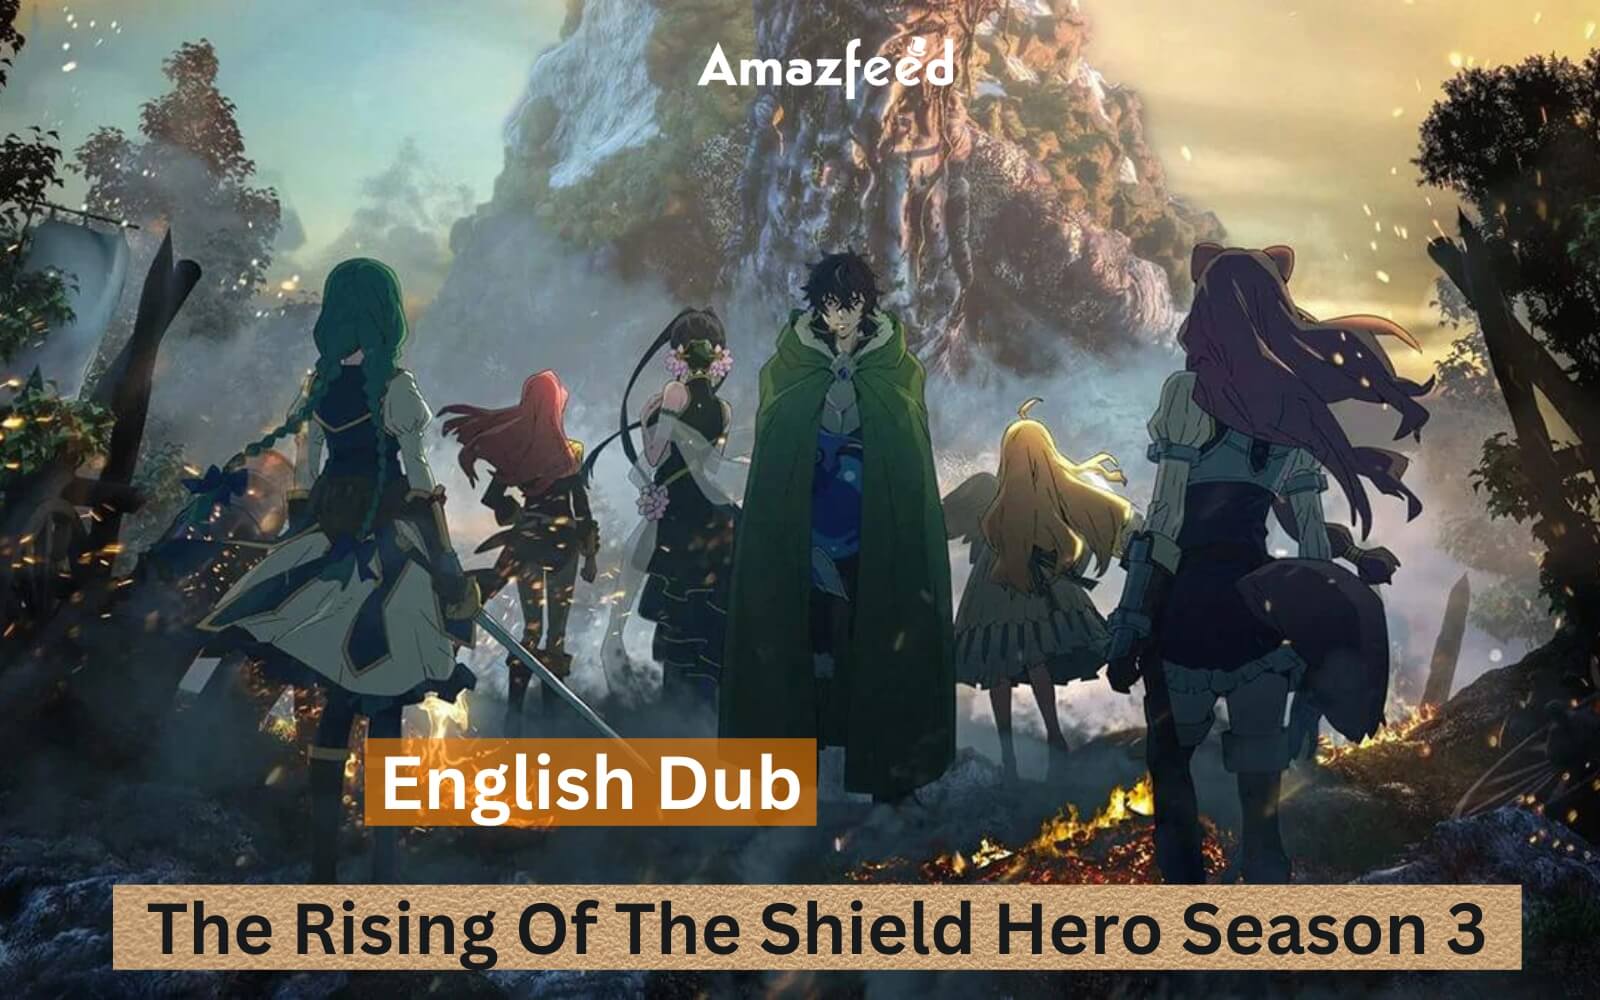 The Rising of the Shield Hero (TV Series 2019– ) - Episode list - IMDb